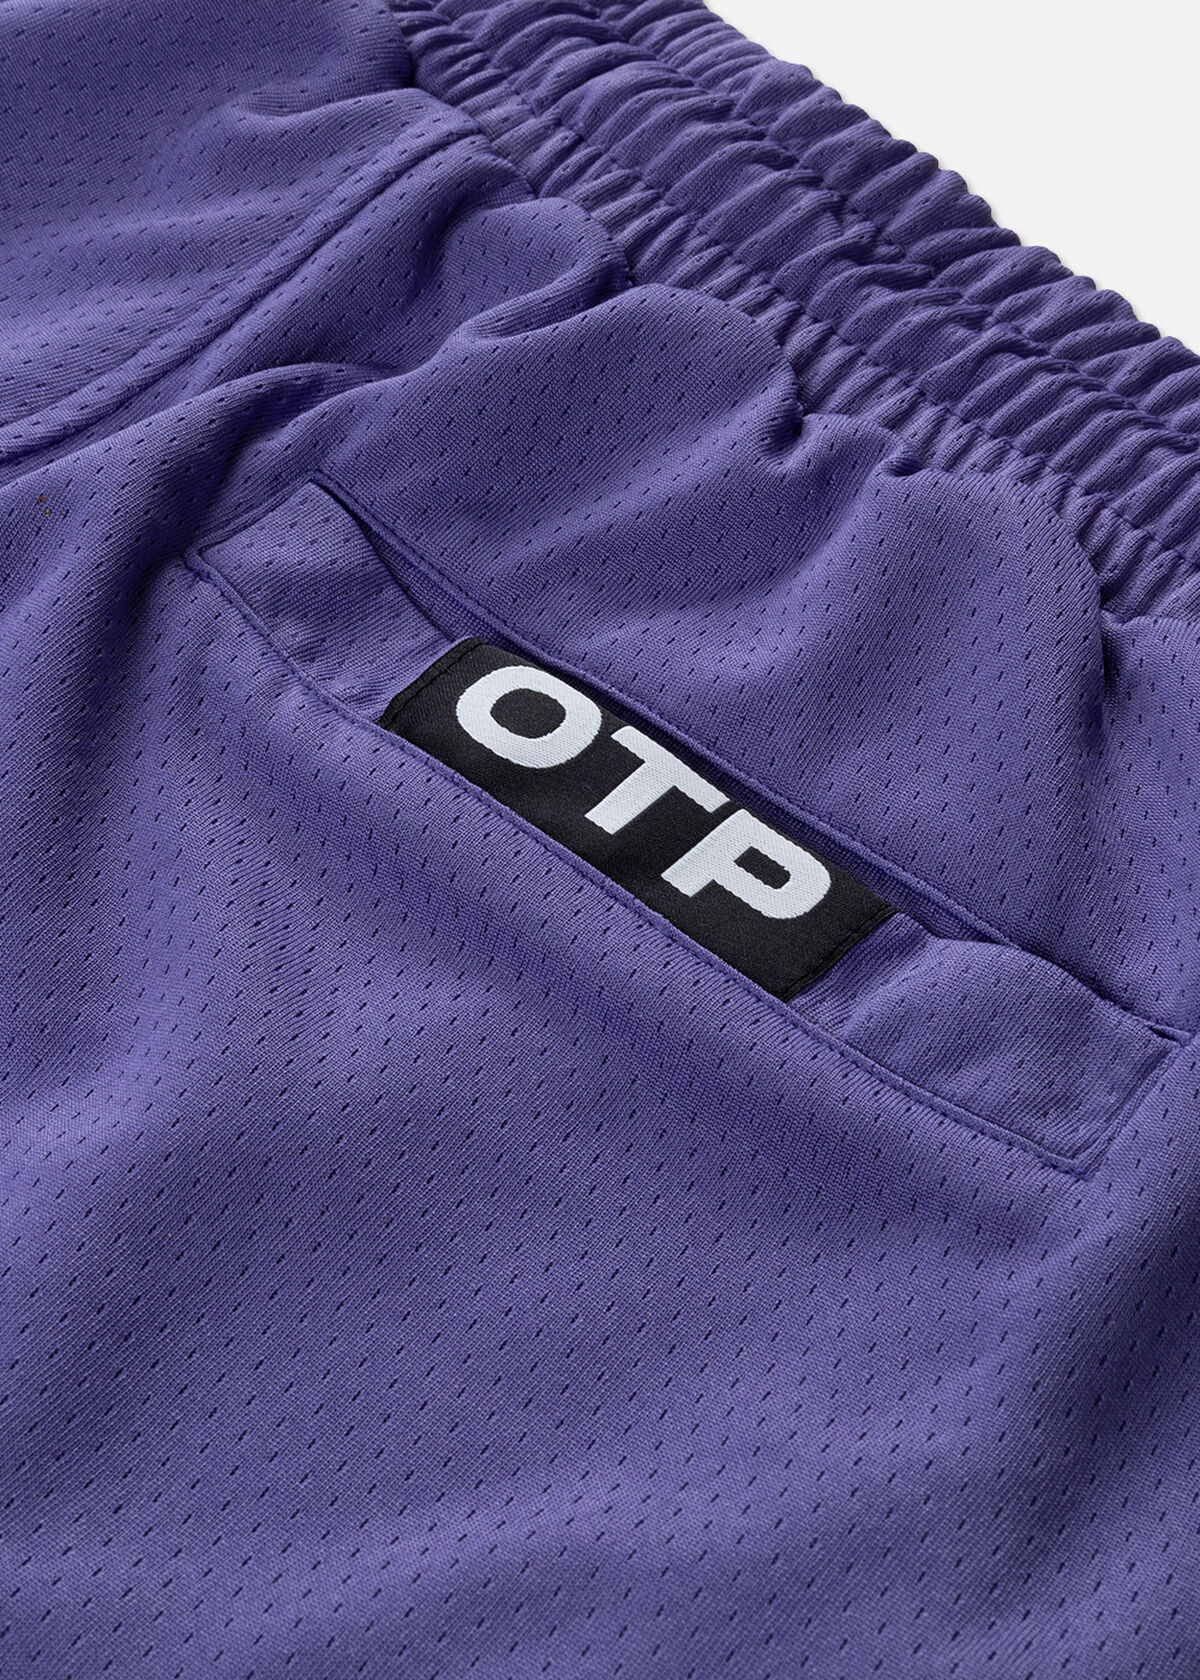 Tropea Basketball Shorts - 95% Polyester / 5% Elas, Purple, hi-res